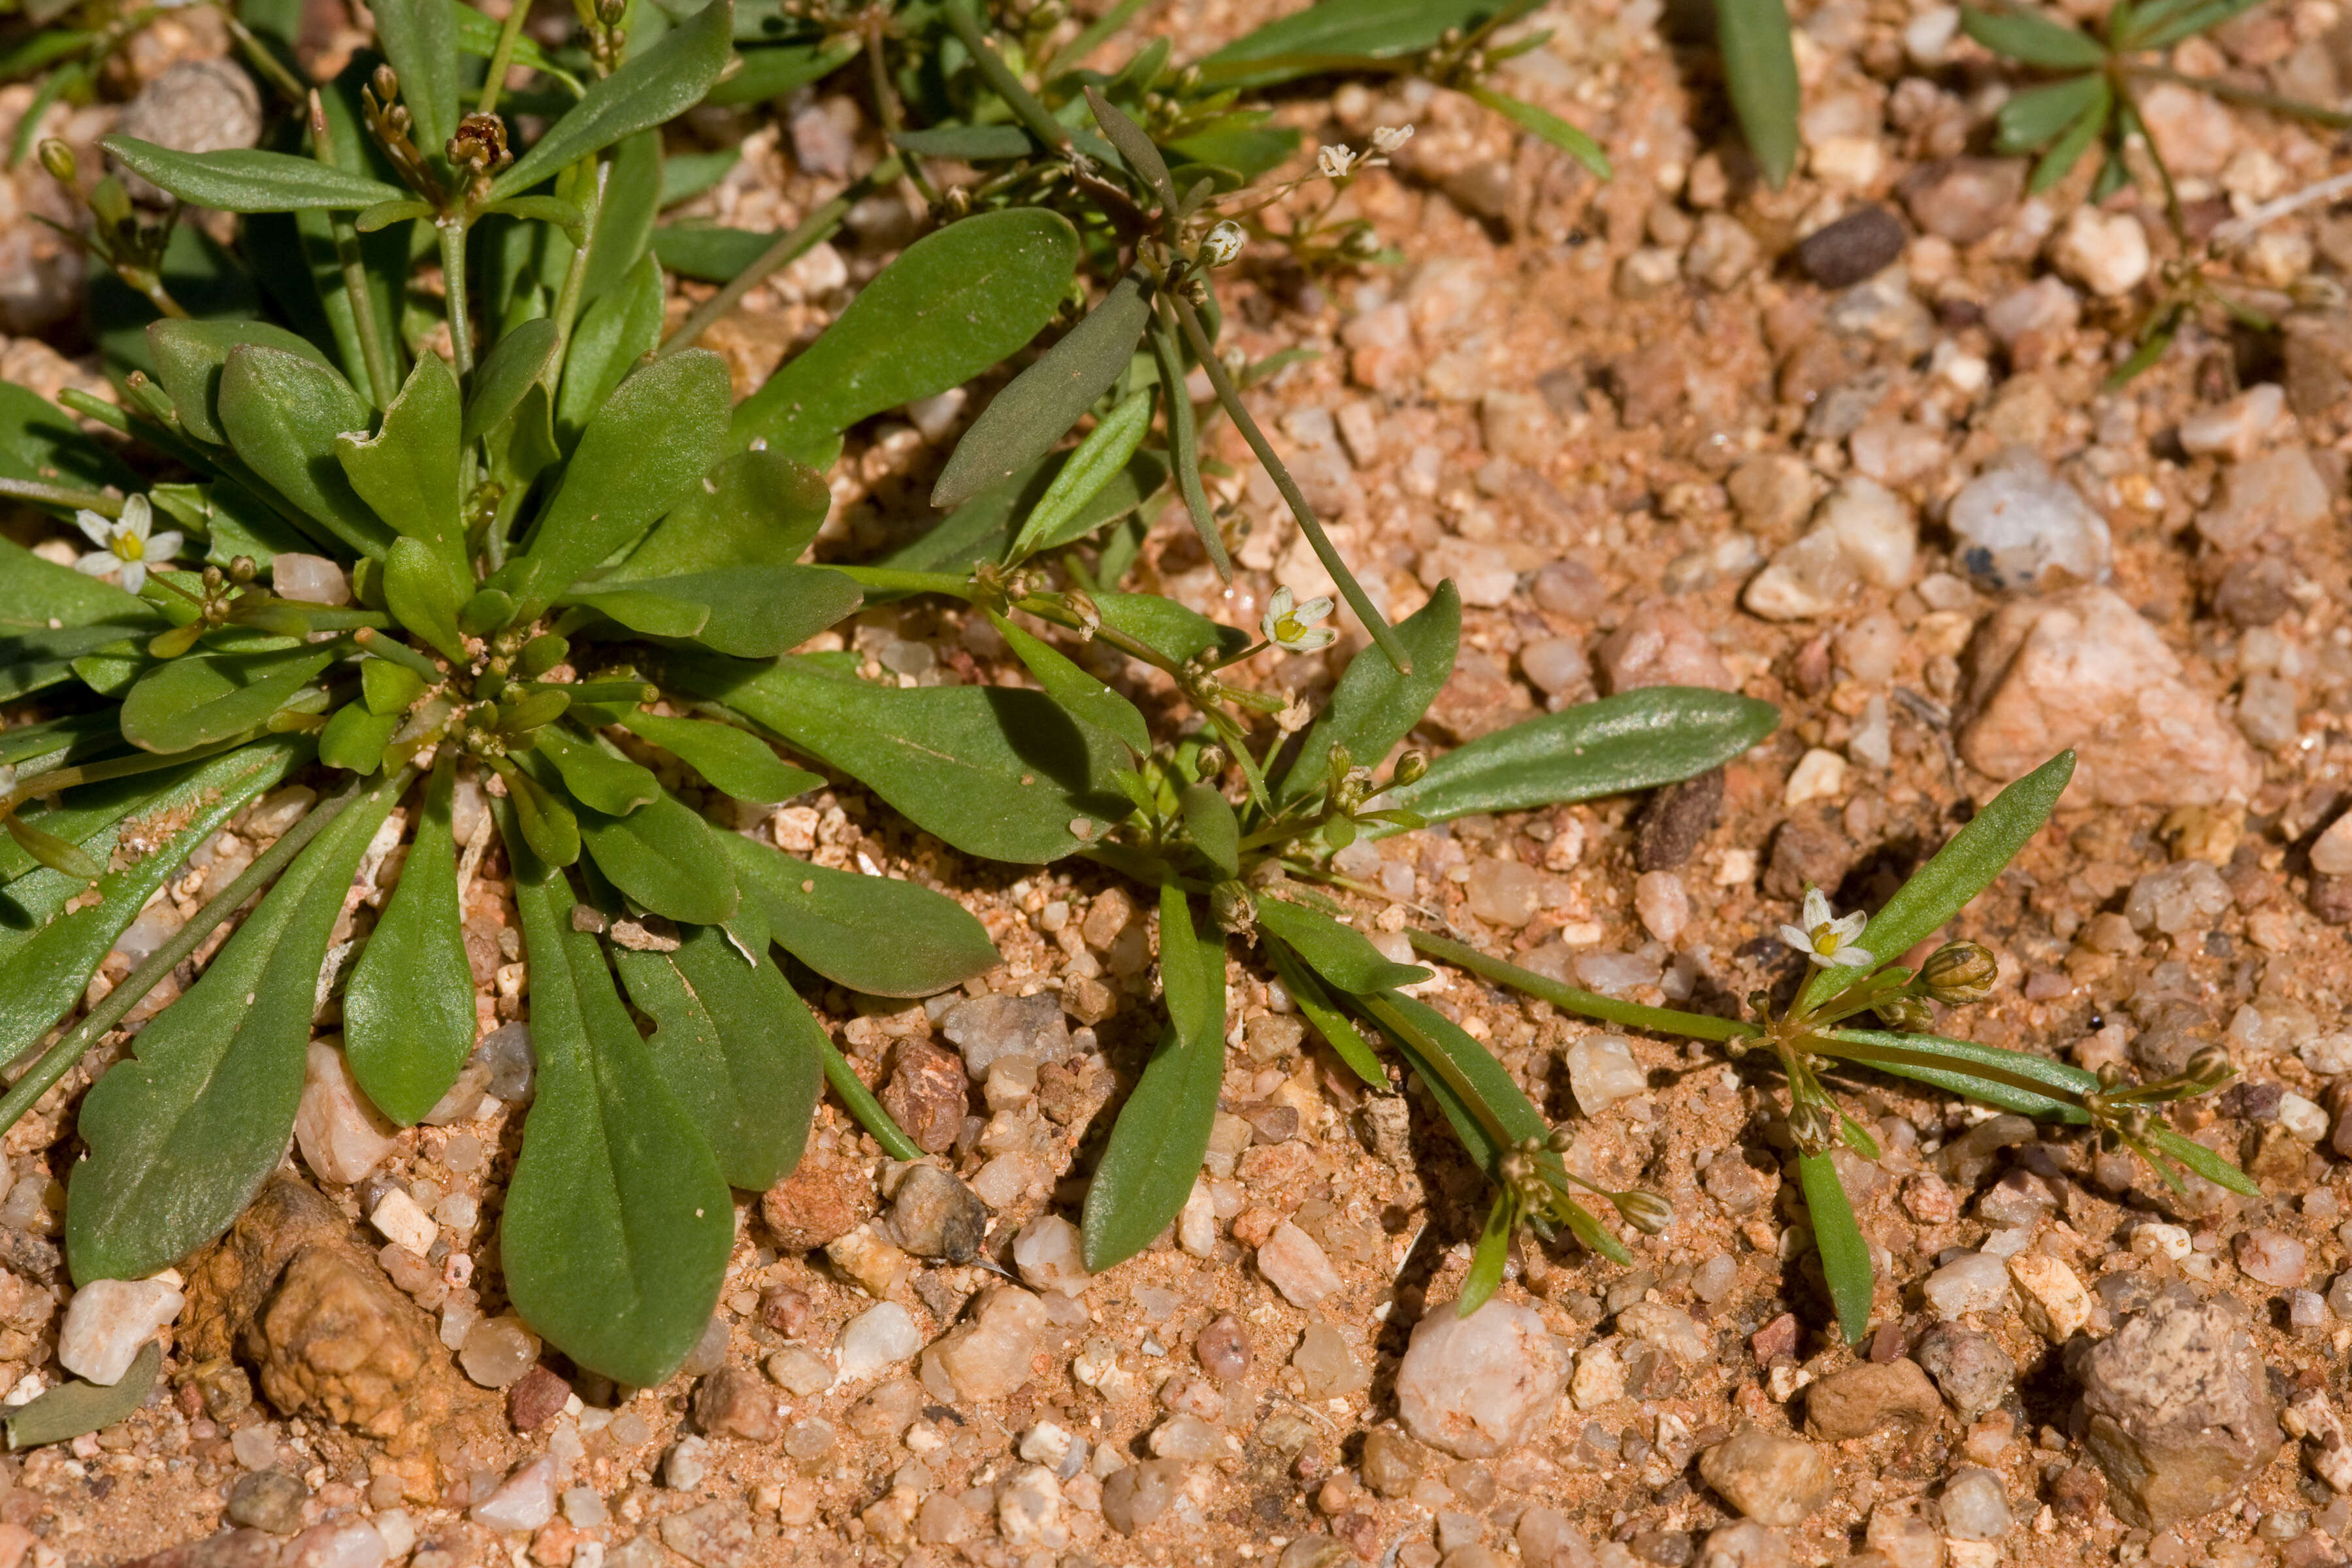 Image of carpetweed